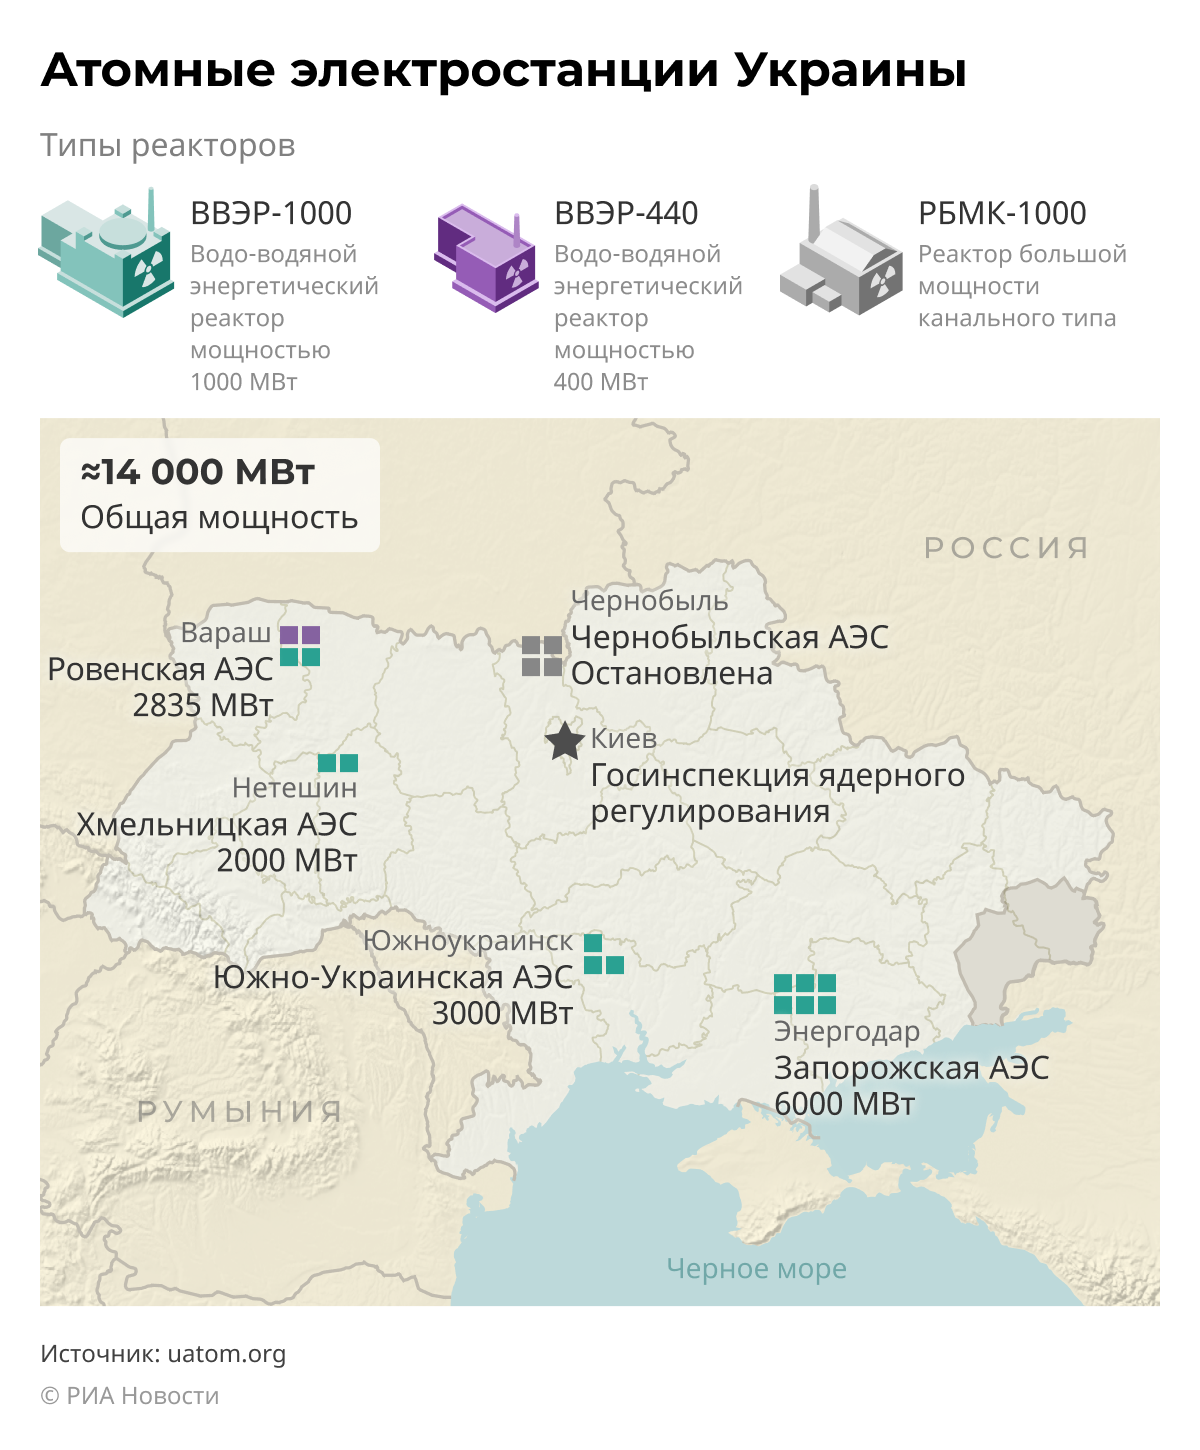 Запорожская аэс на карте где расположена. АЭС Украины на карте. АЭС Украины список карта. Атомные электростанции Украины 2022 на карте. Атомные станции на Украине 2022.